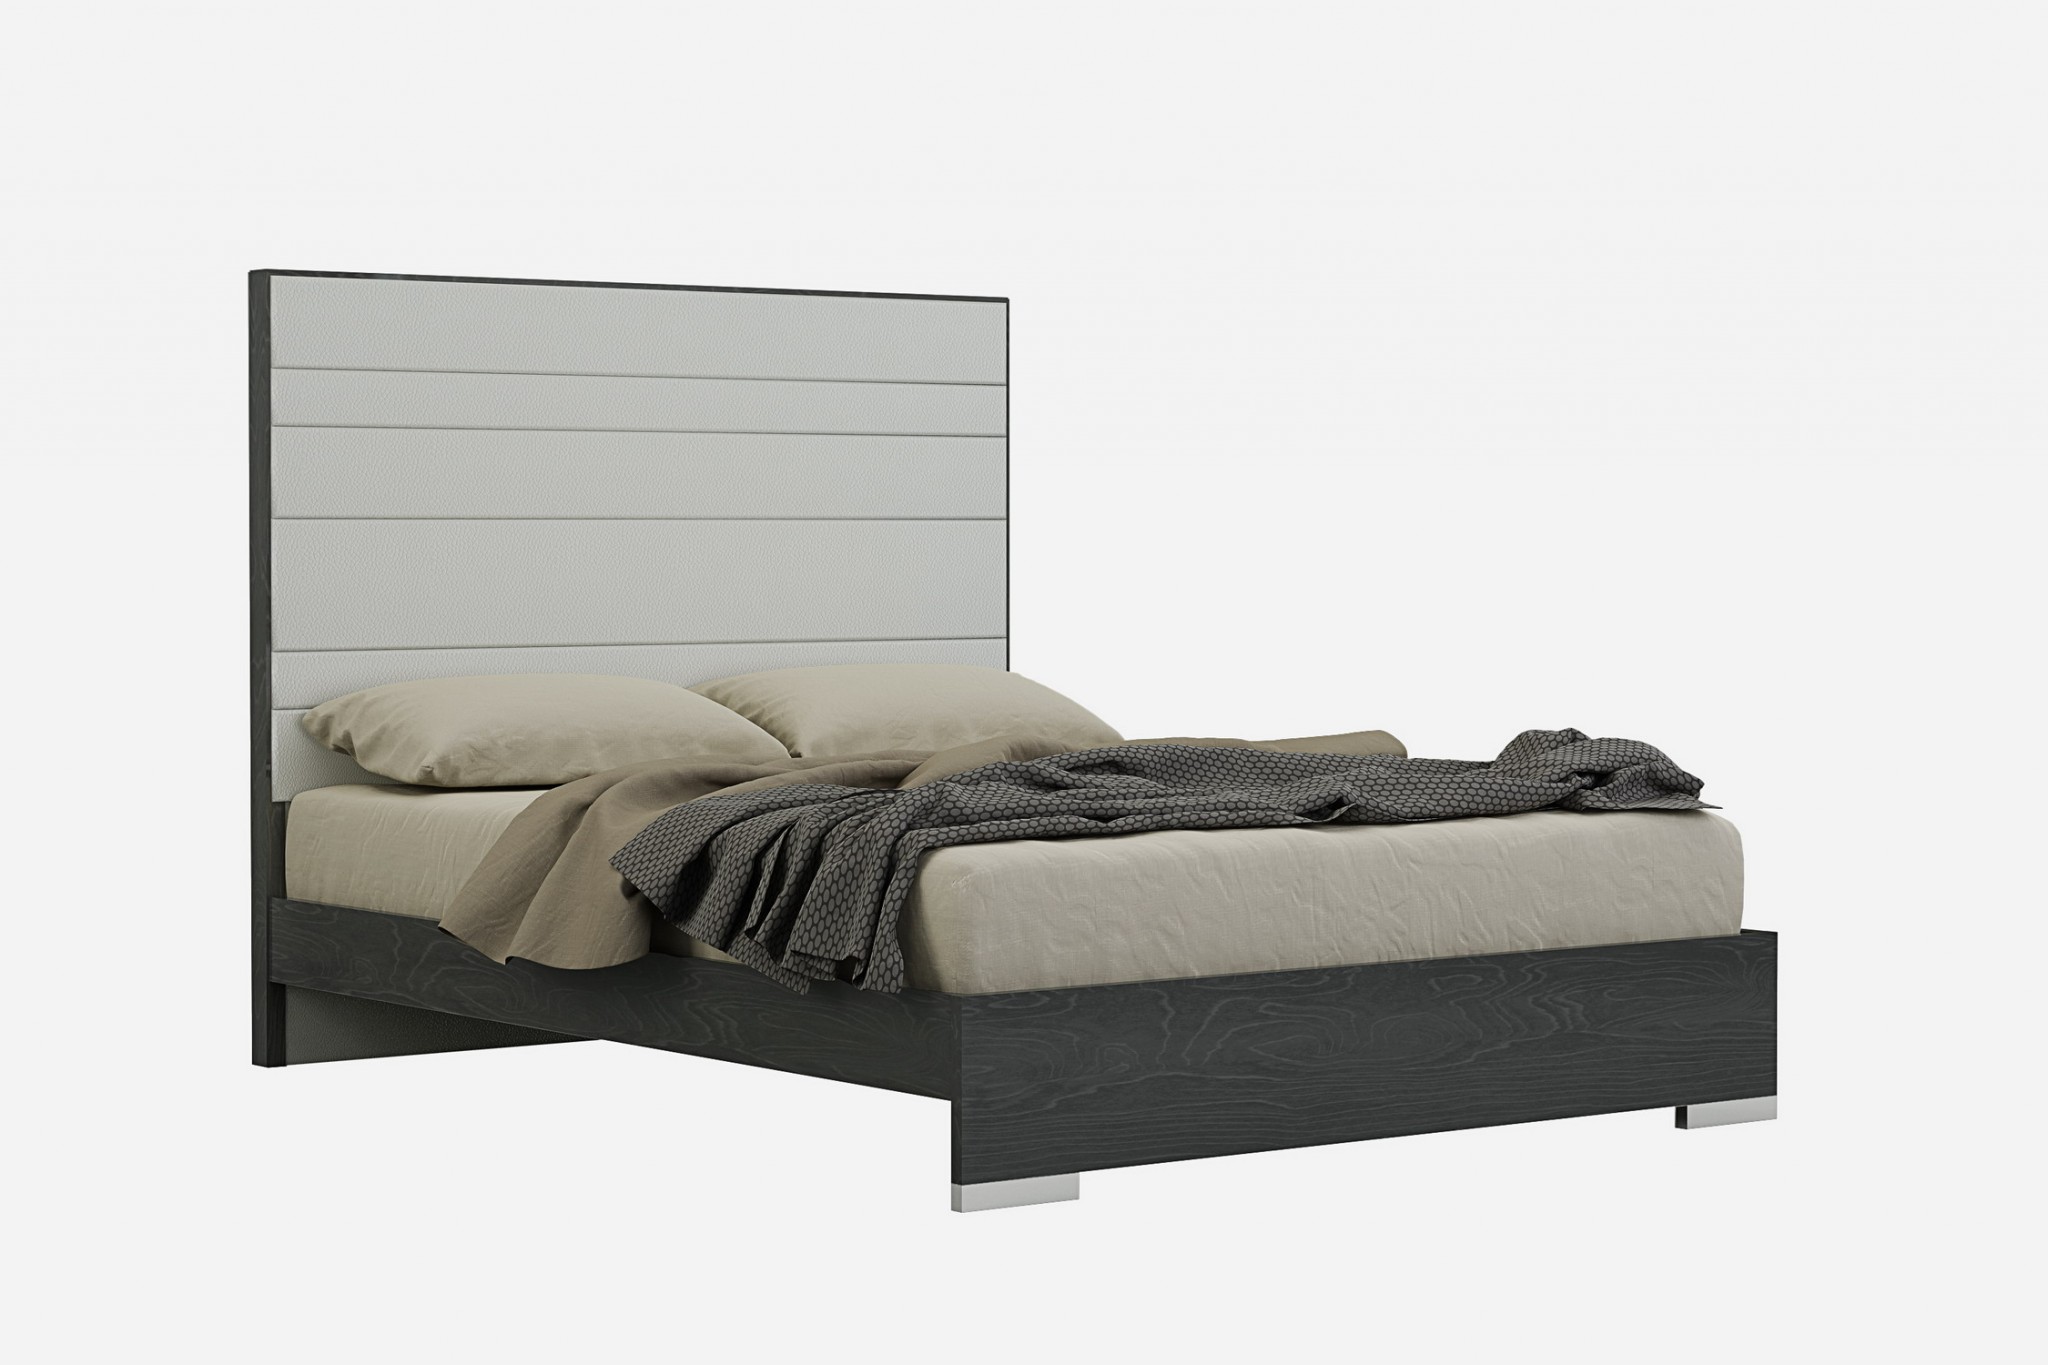 60" X 80" X 54" Grey Stainless Steel Queen Bed